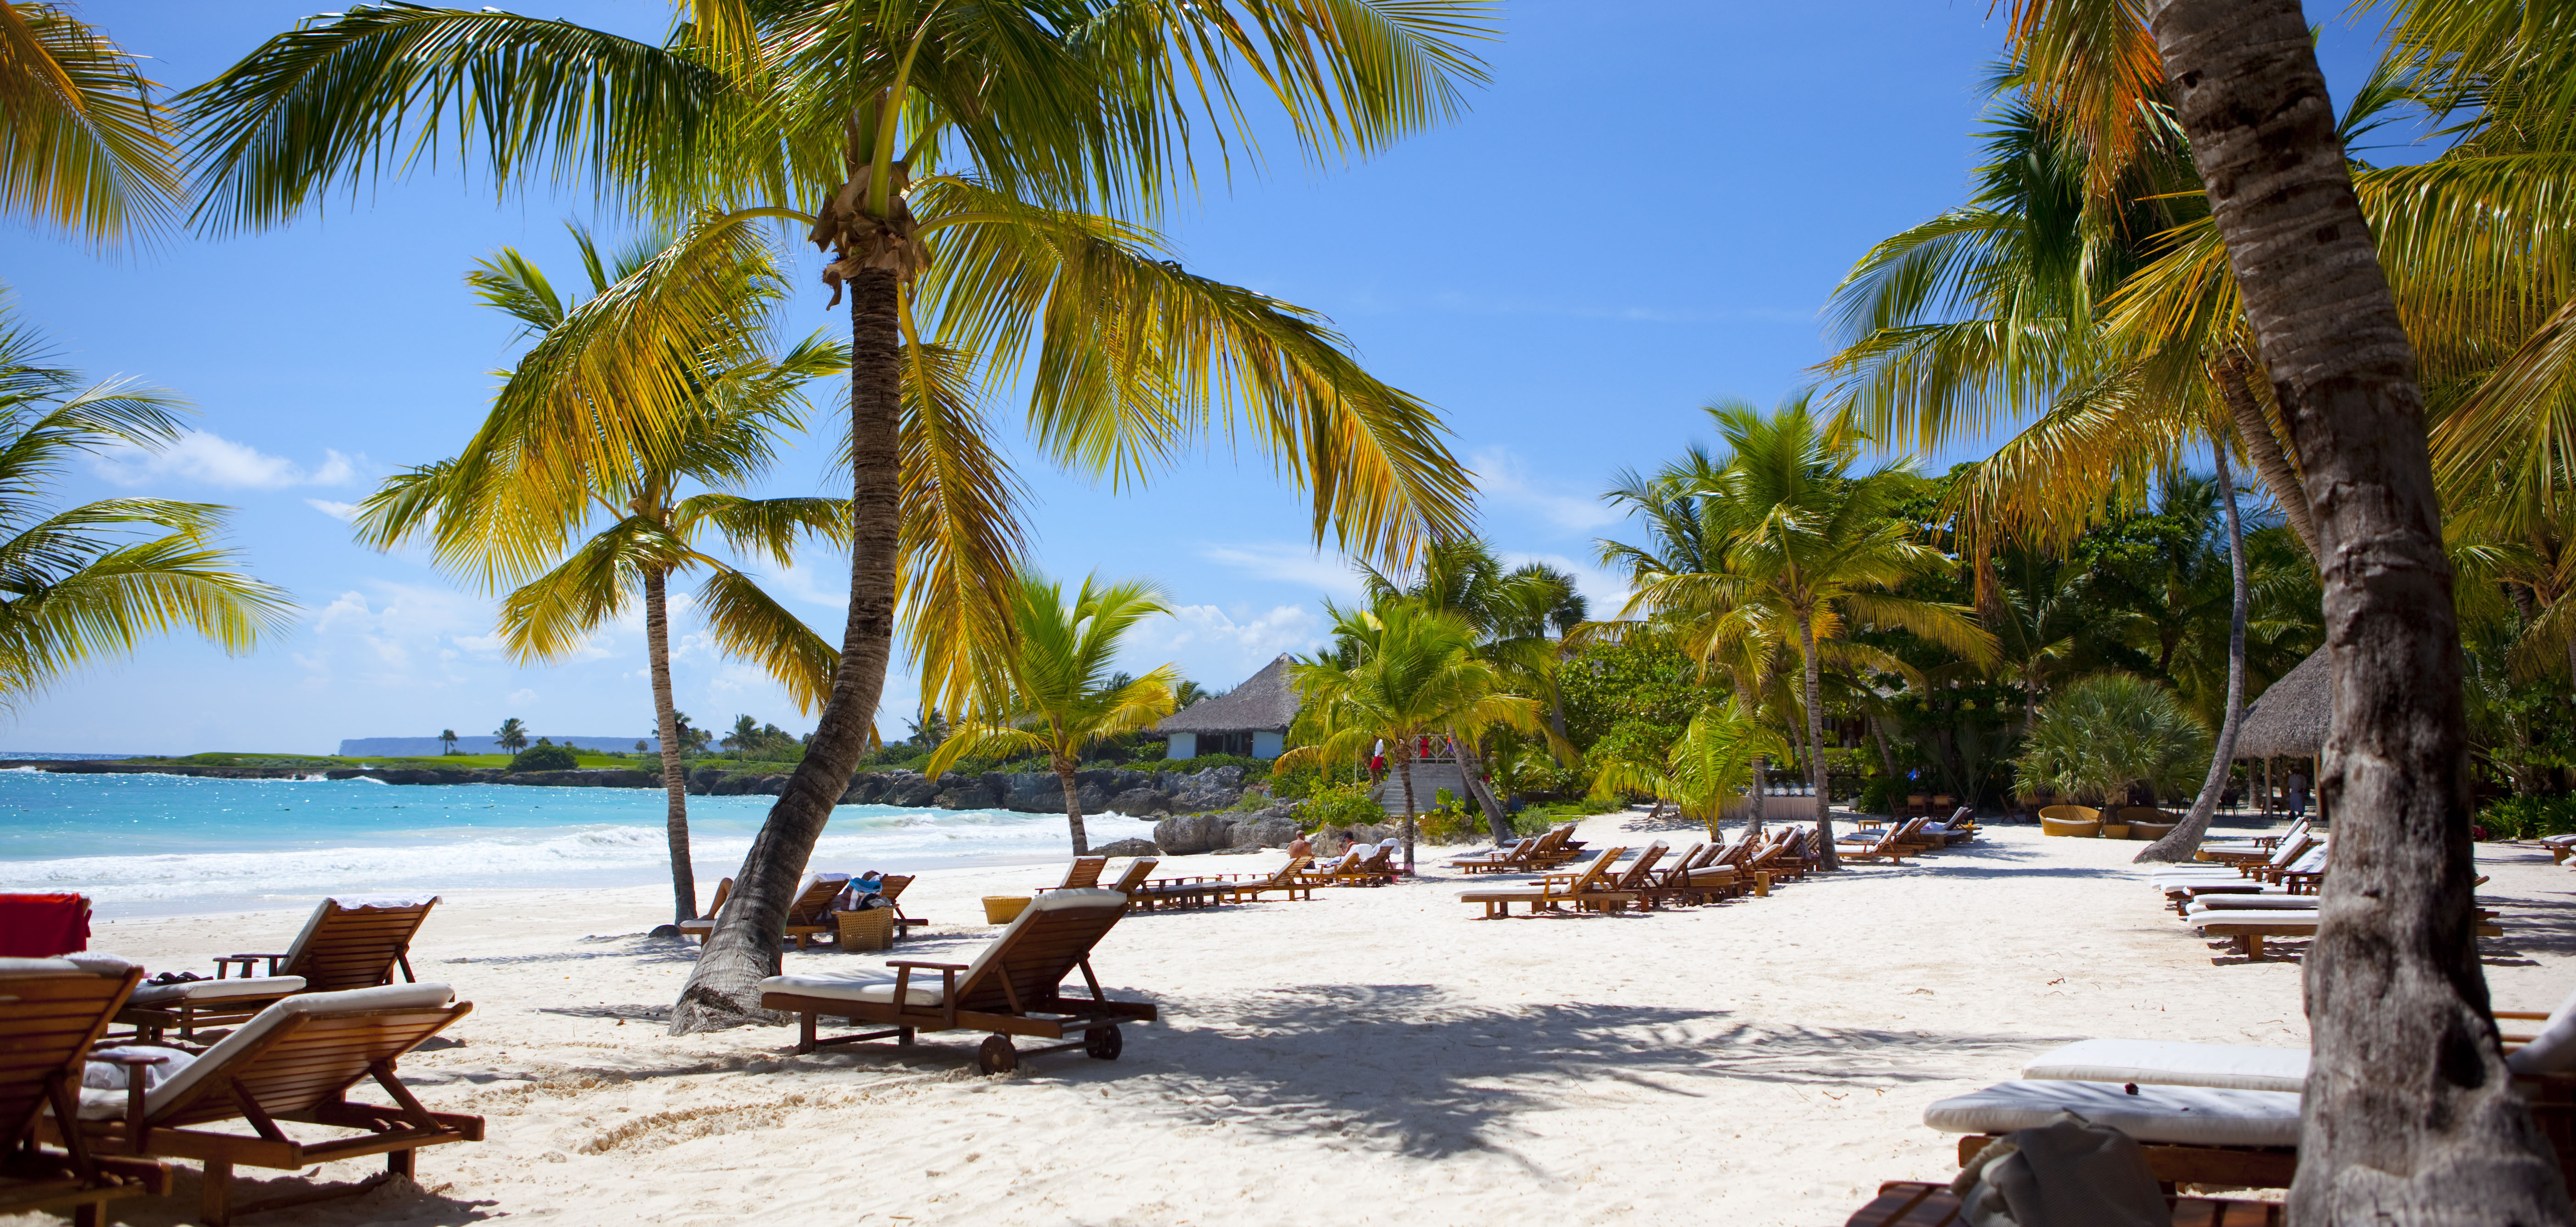 $1499 - Отдых на 2 островах Кариб: Мартиника, Сент-Лусия, Барбадос